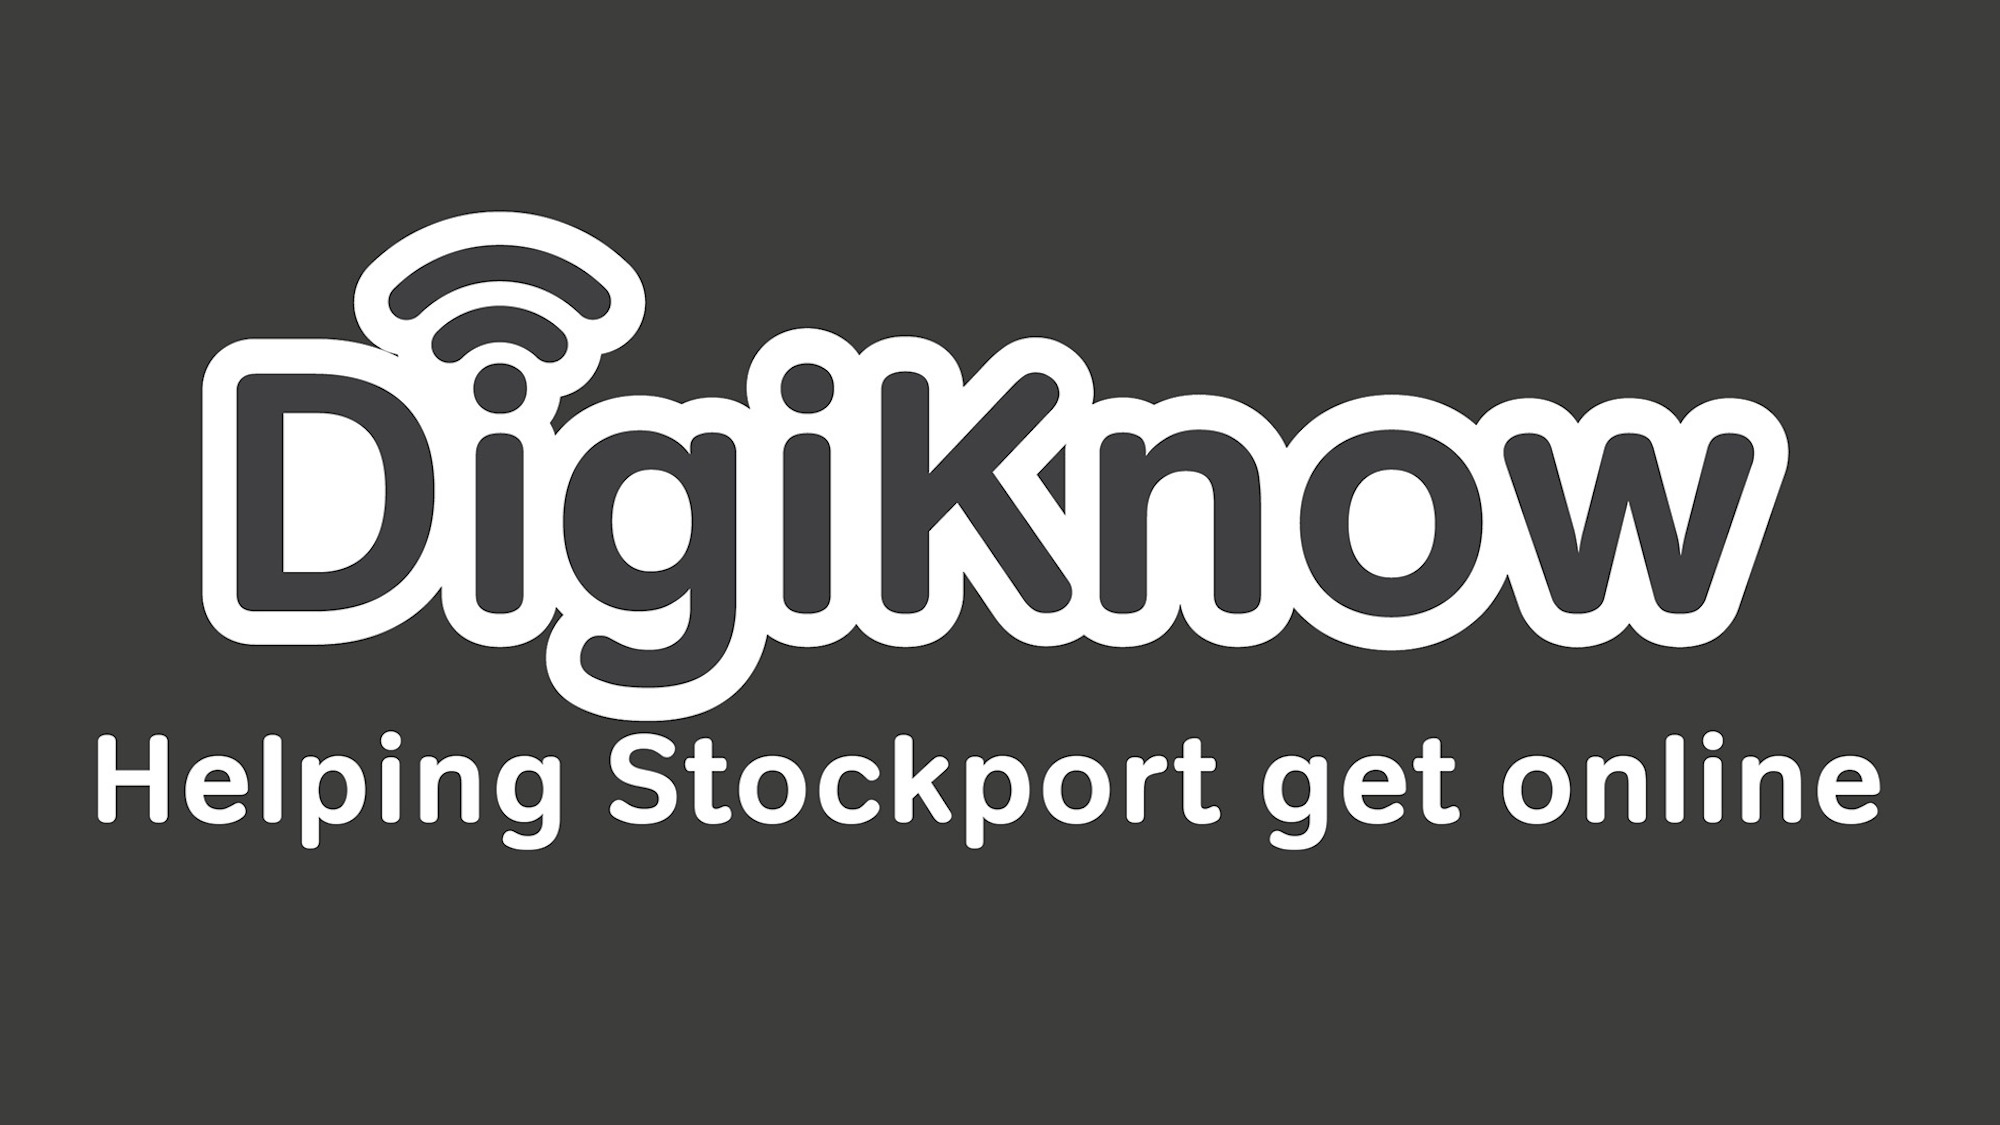 Community groups help Stockport residents improve digital skills